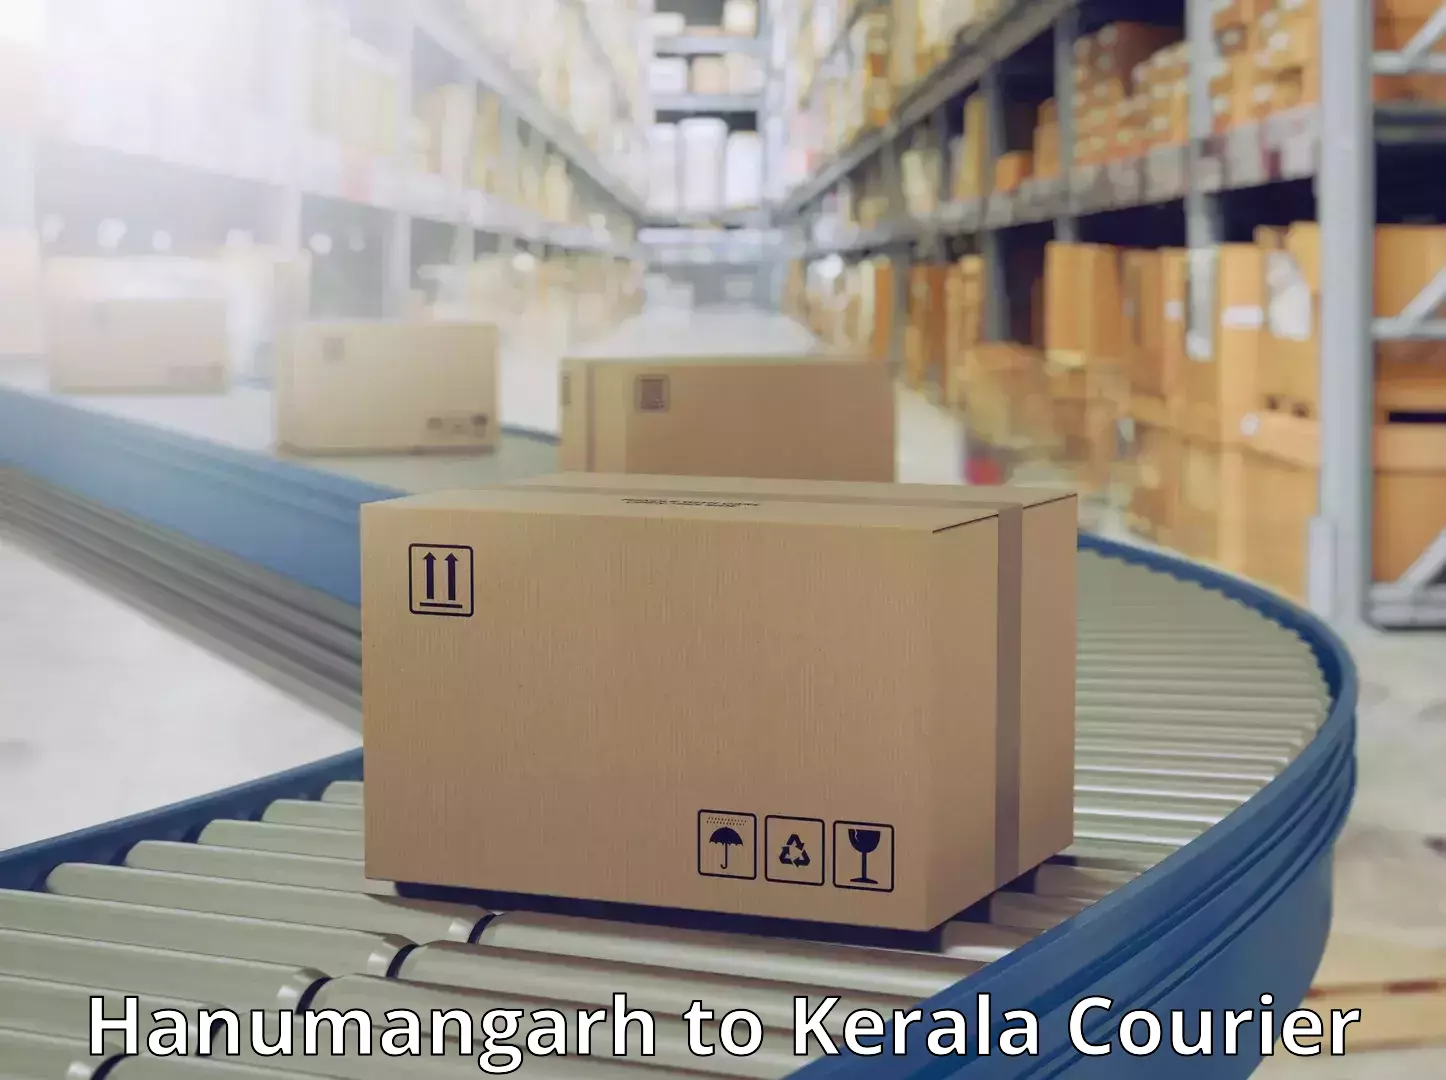 Package delivery network Hanumangarh to Pallikkara